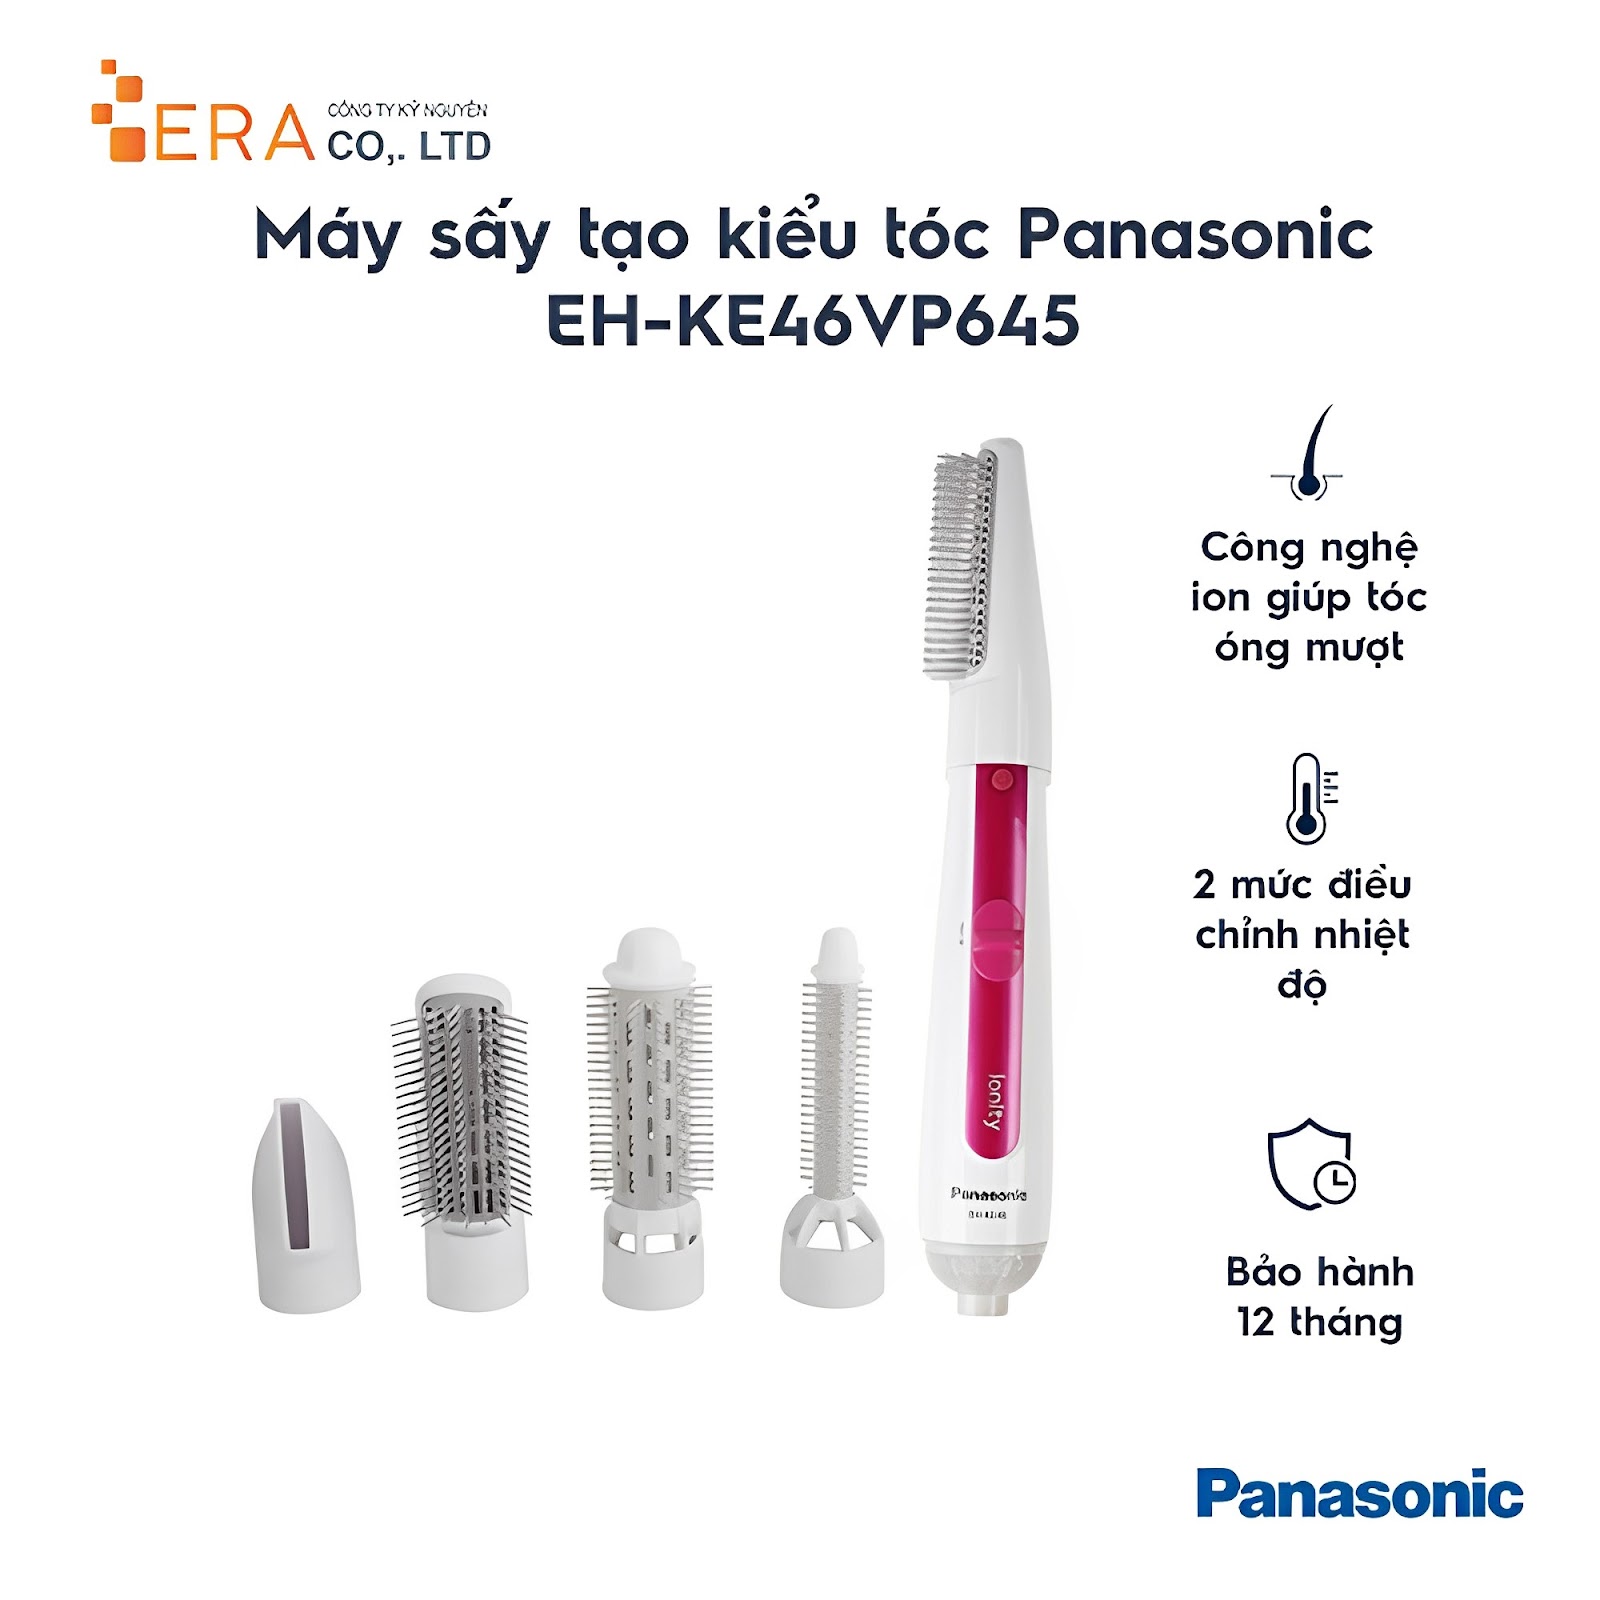 Máy uốn tóc Panasonic PAST-EH-KE46VP645 (Nguồn: Internet)